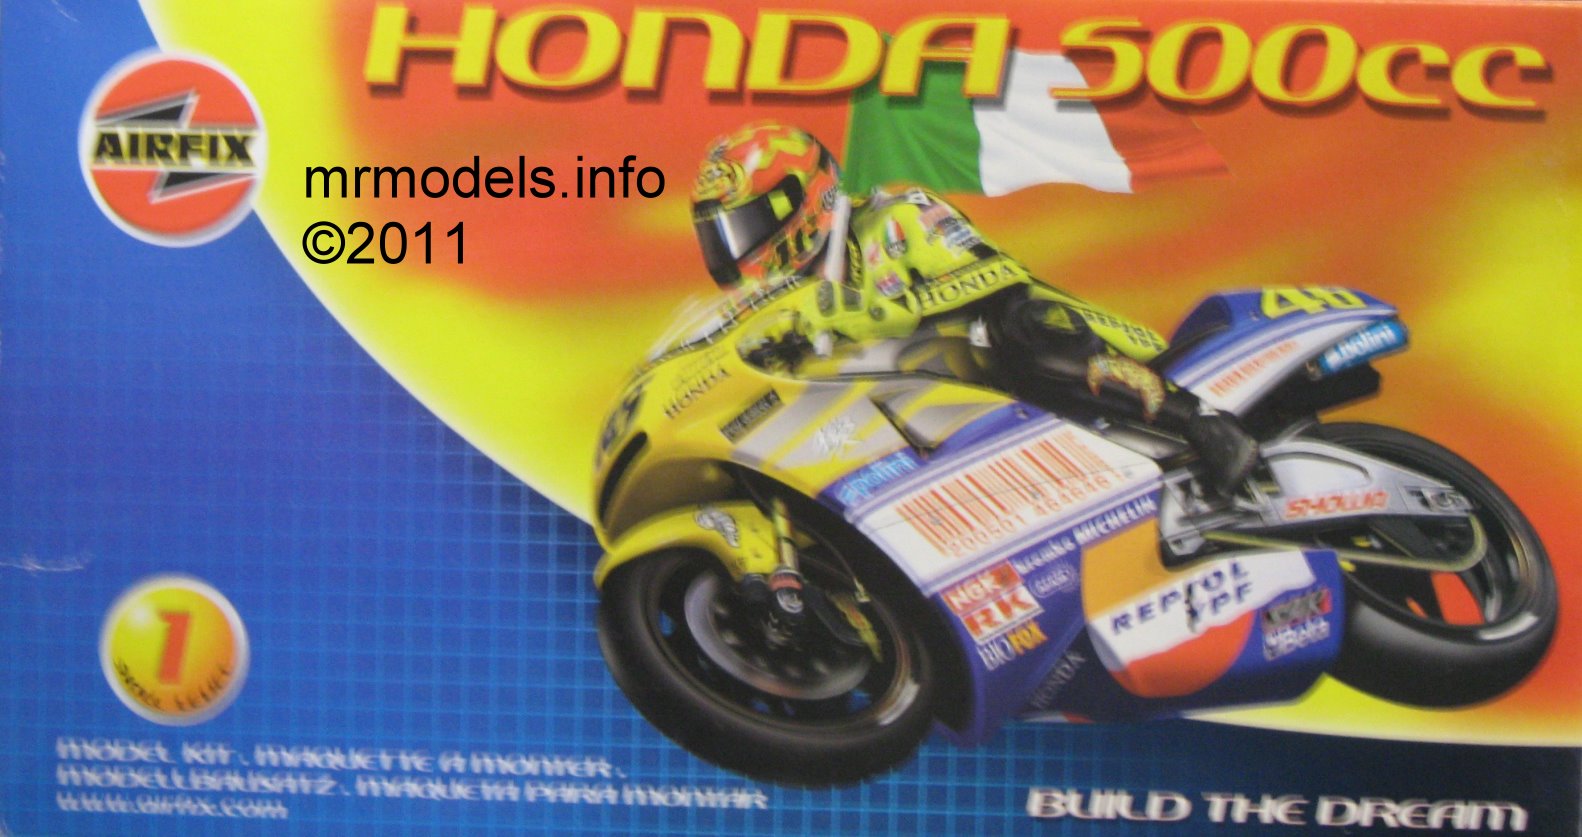 Honda 500cc